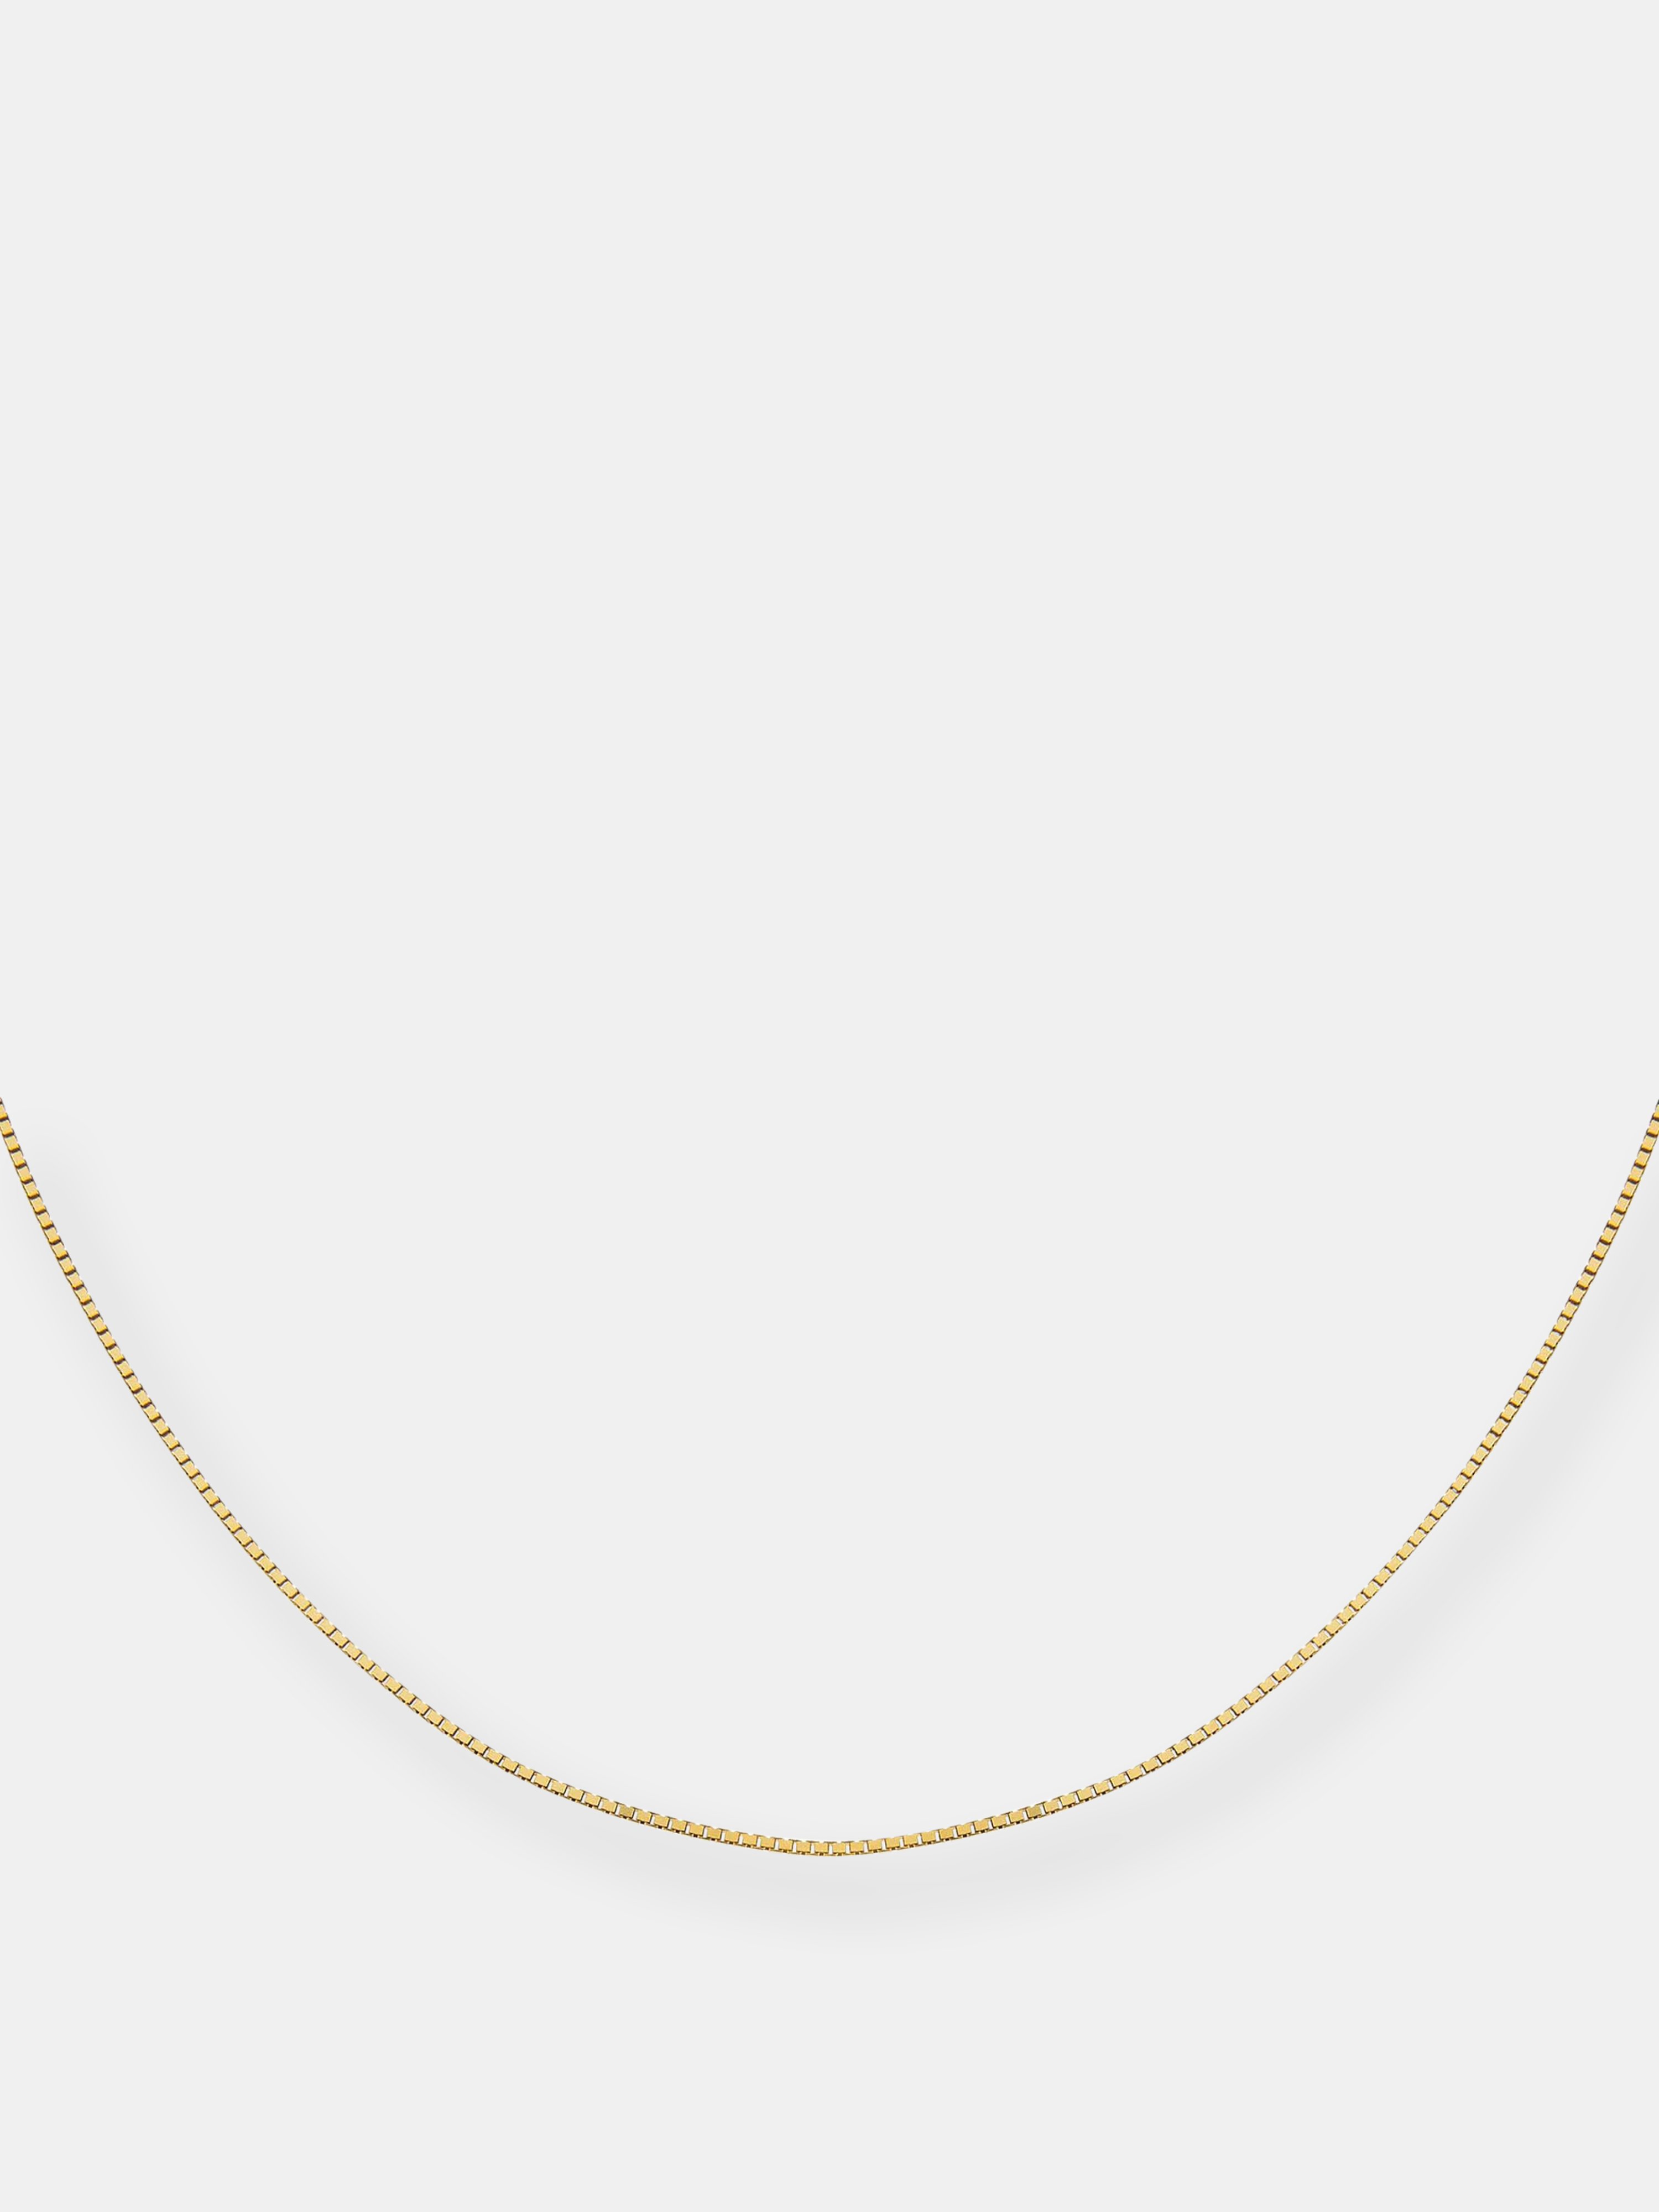 Adinas Jewels Adina's Jewels Thin Box Chain Necklace In Gold